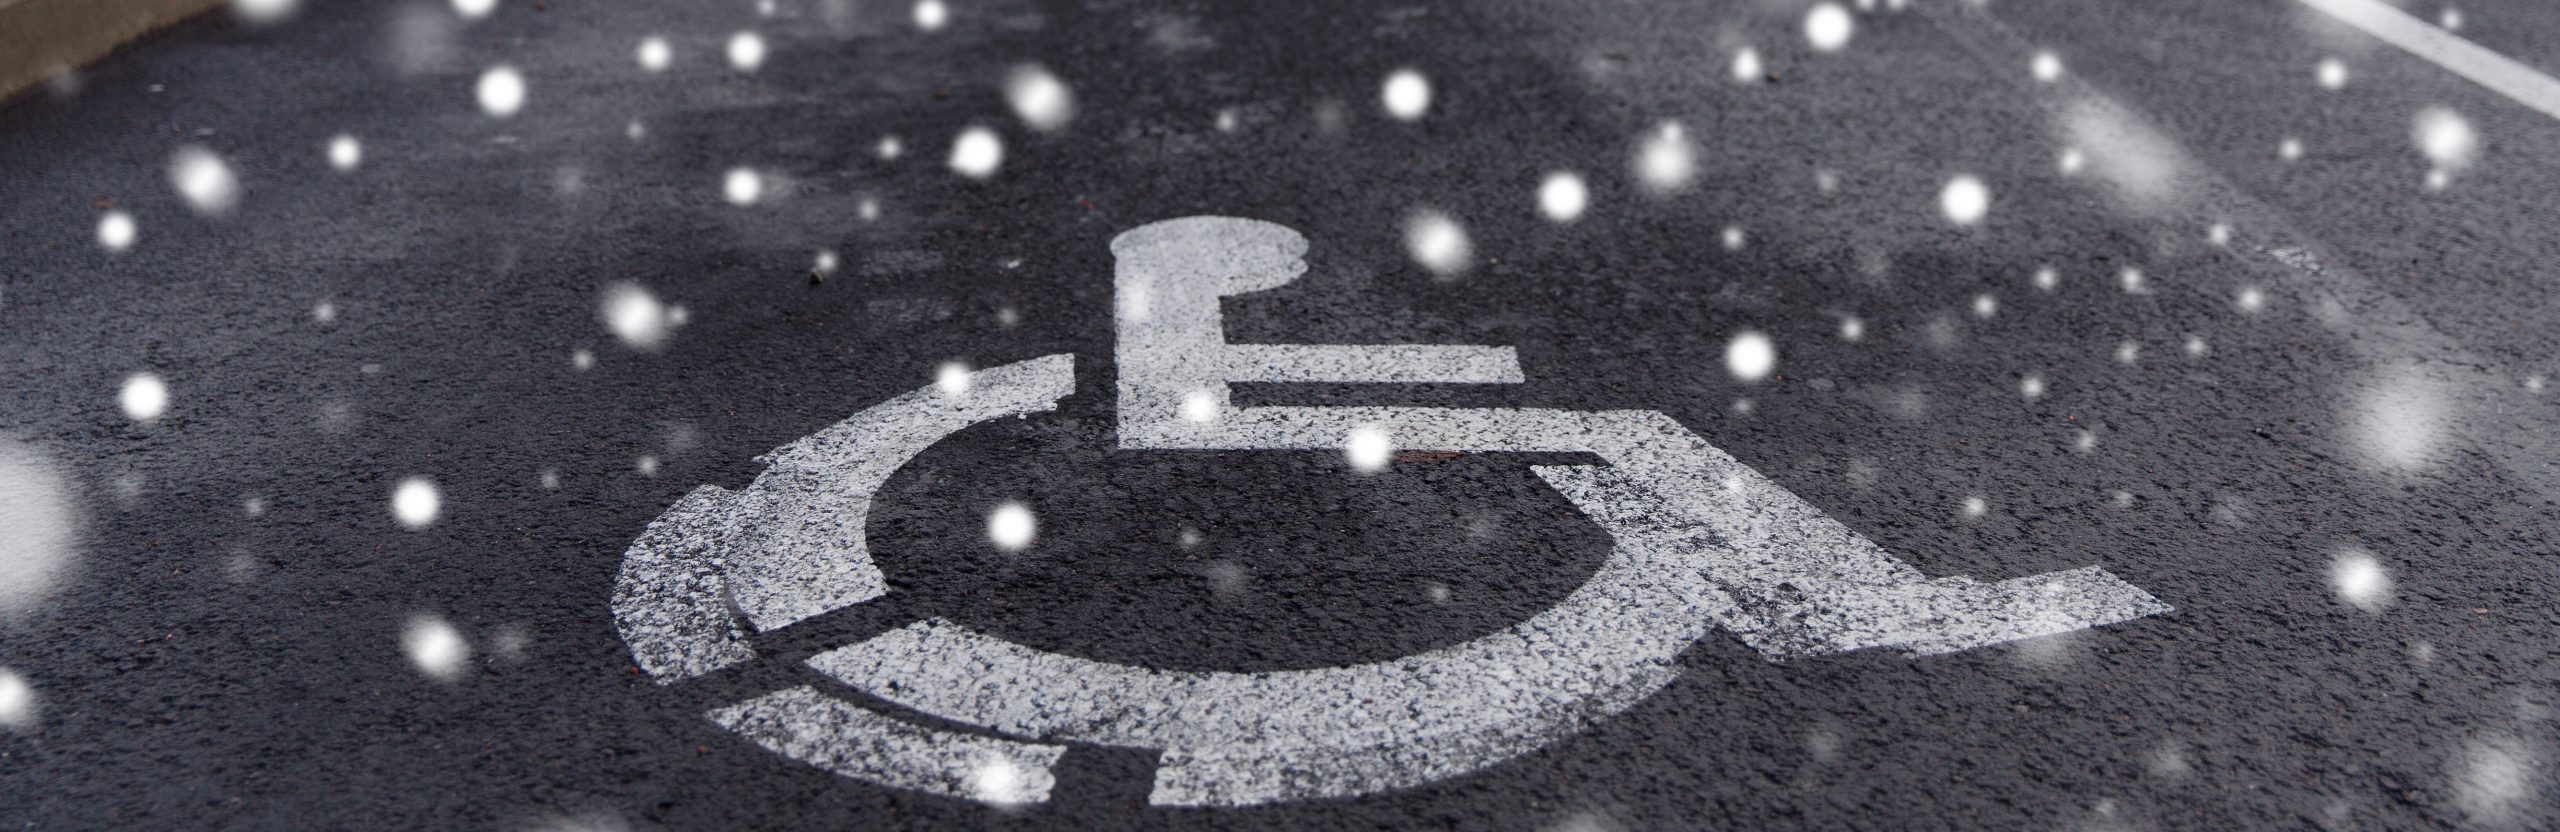 Handicap logo with snow fall